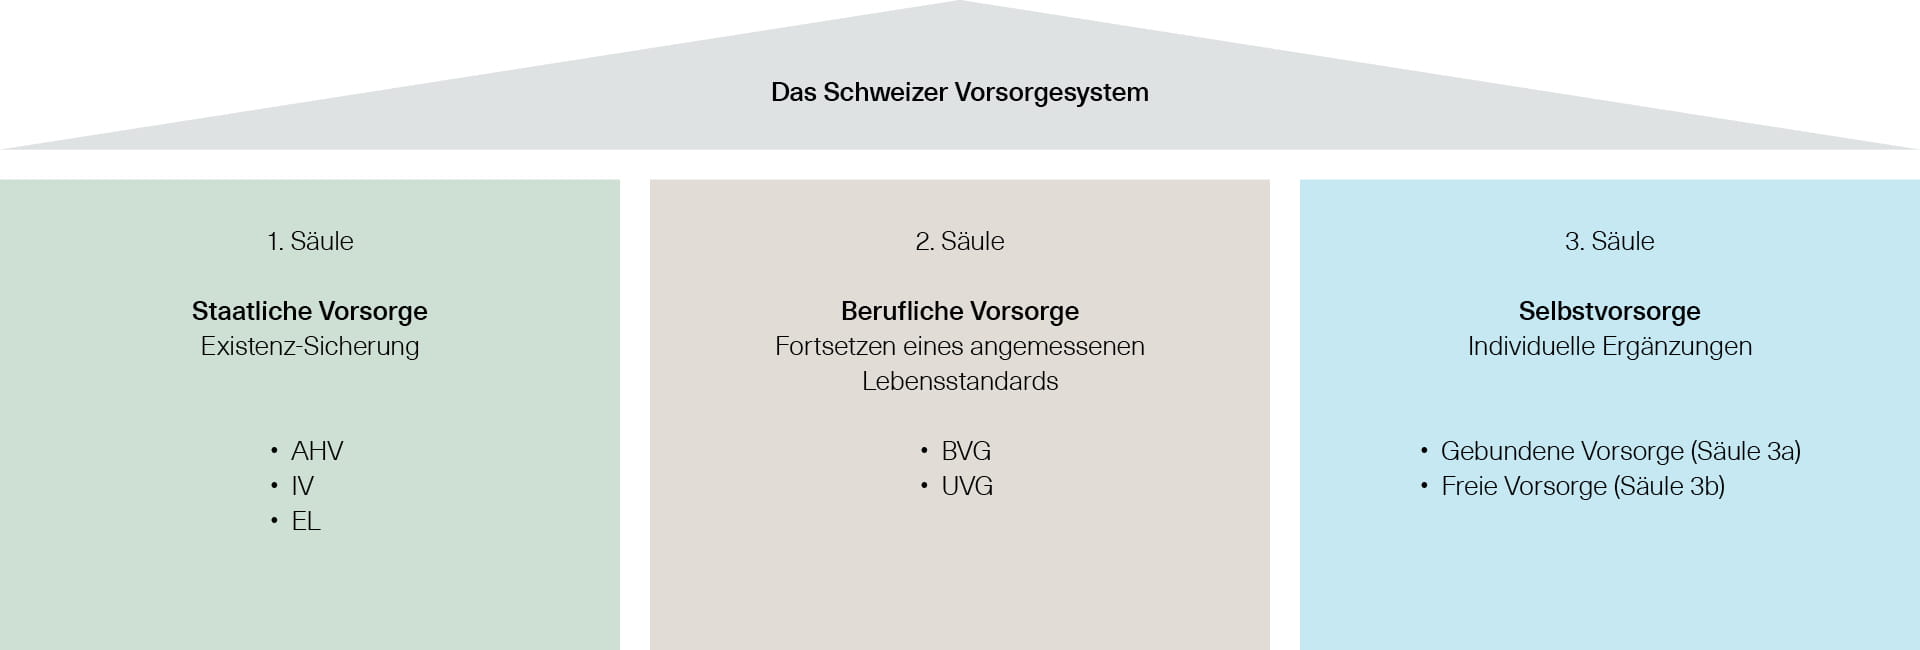 3 Saulen Prinzip Basler Kantonalbank